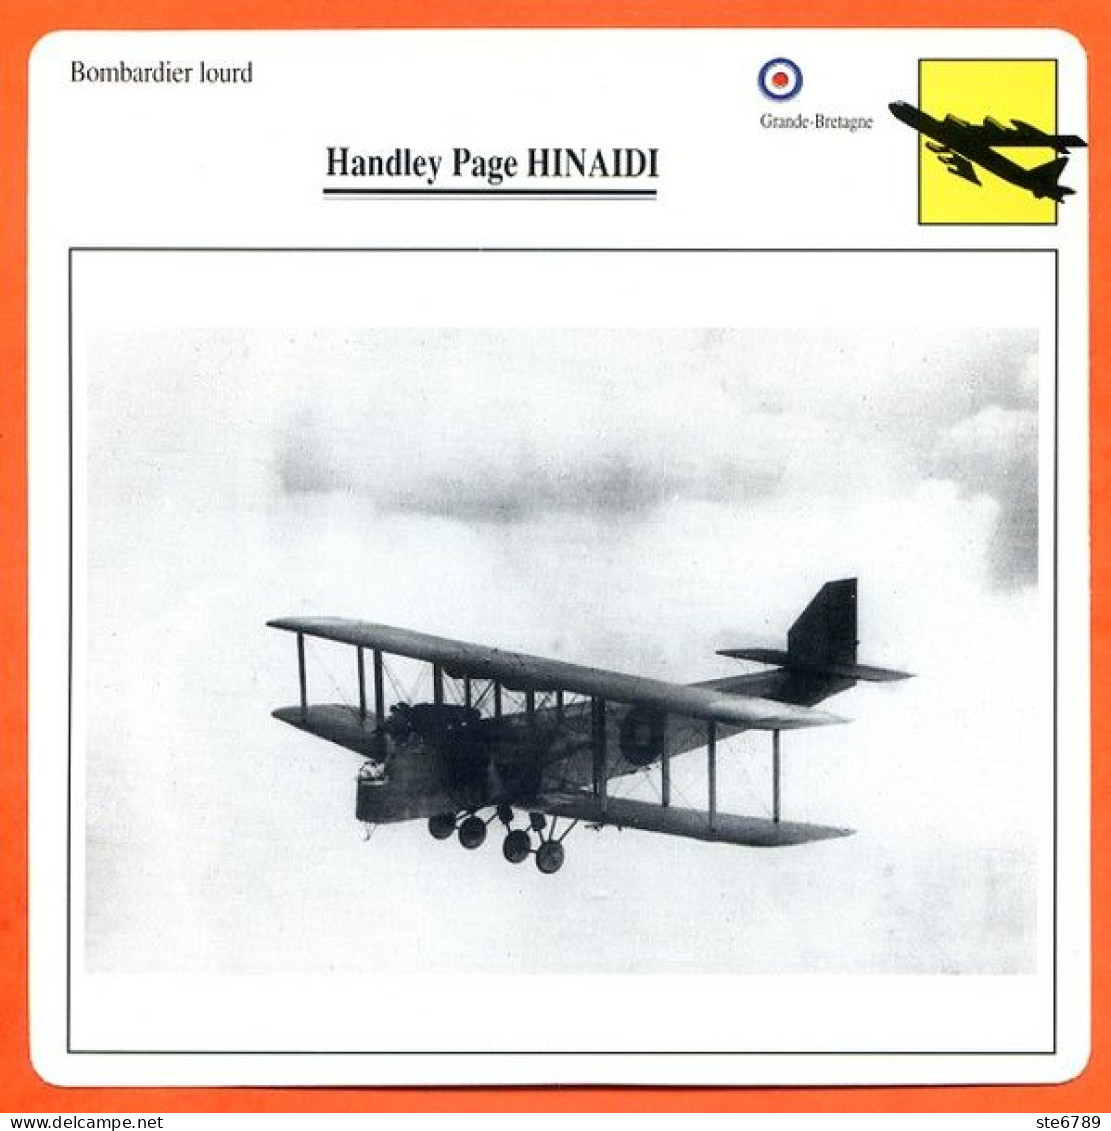 Fiche Aviation Handley Page HINAIDI  / Avion Bombardier Lourd UK Avions - Airplanes